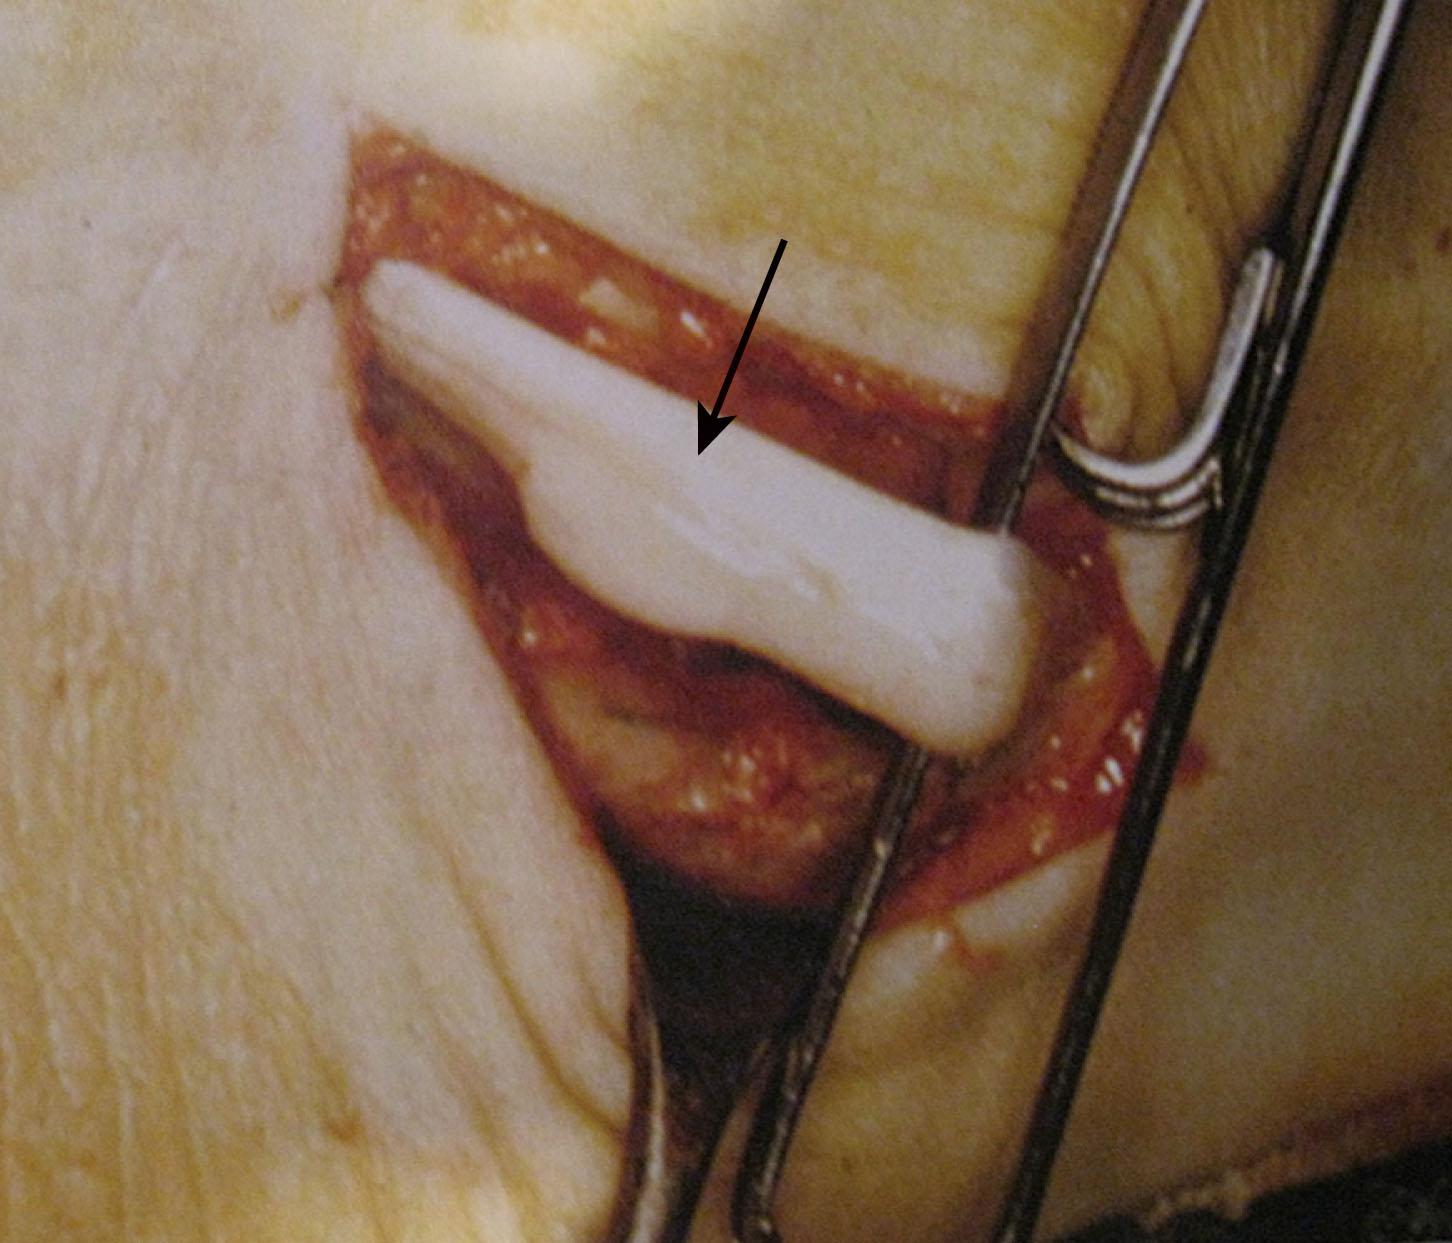 Fig. 28-38, Nodule on the flexor hallucis tendon causing triggering of the hallux (arrow) .